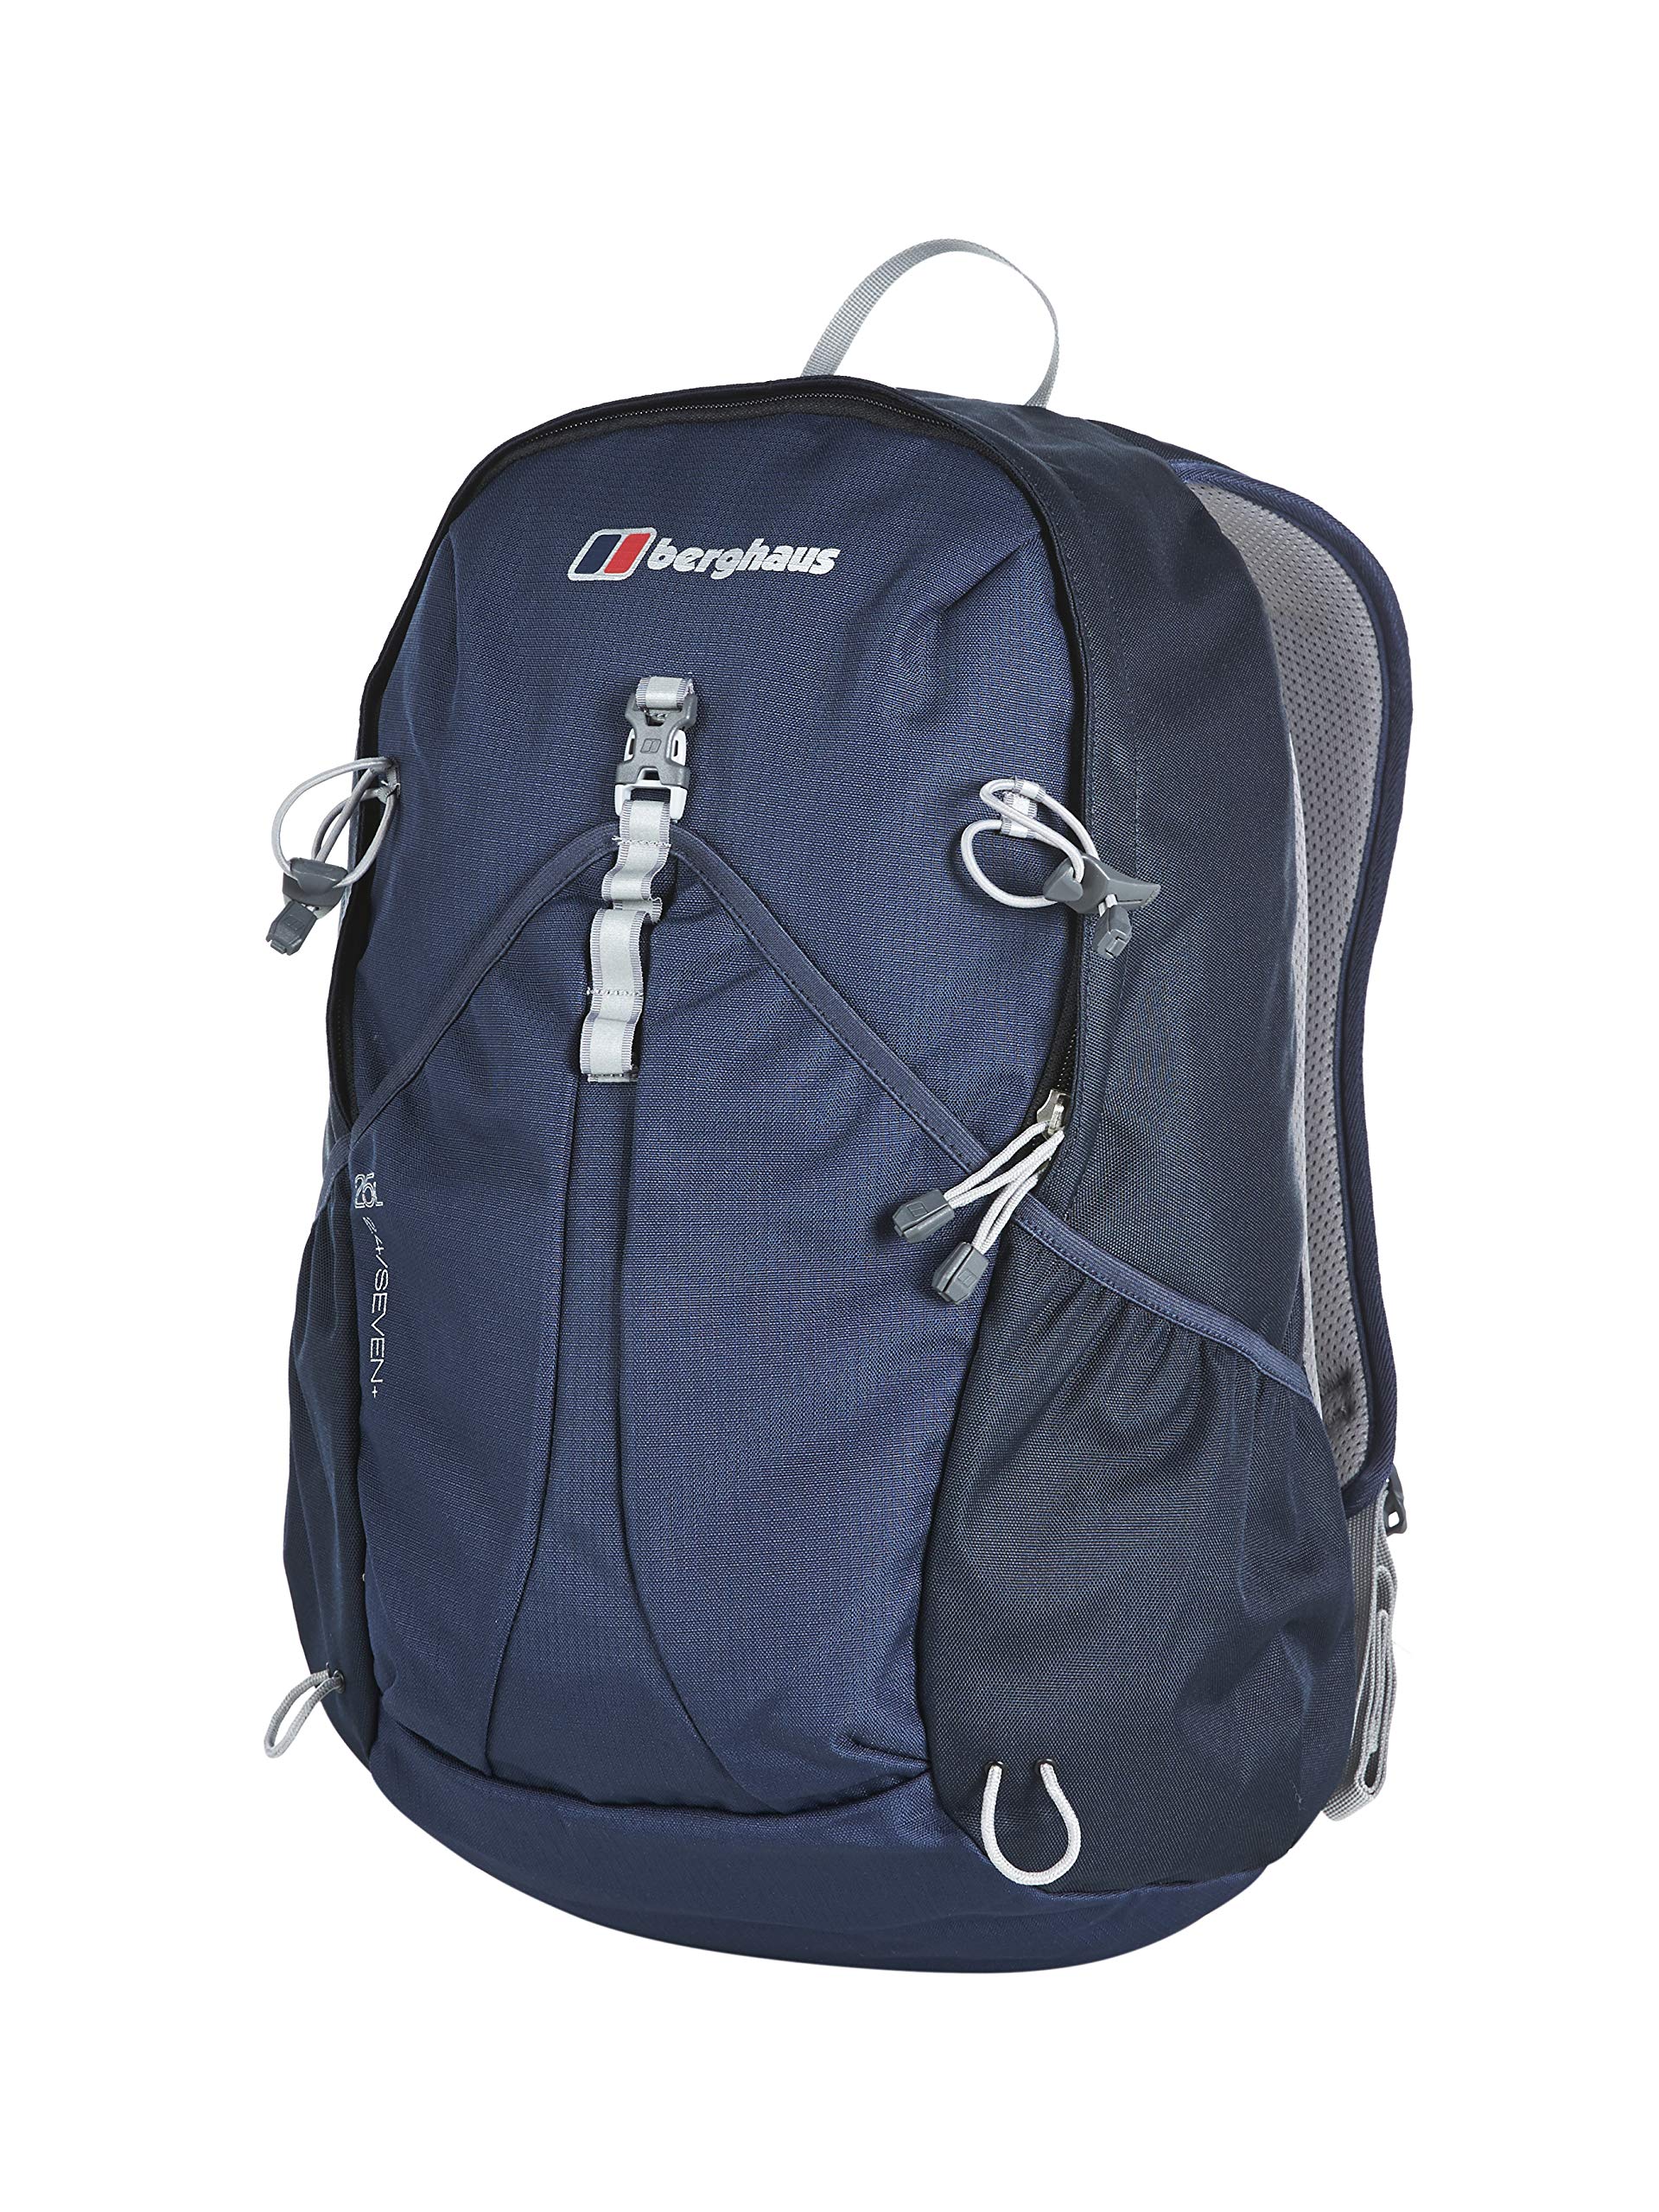 Berghaus Twenty4Seven Plus Backpack 25 Litre, Comfortable Fit, Durable Design, Rucksack for Men and Women,